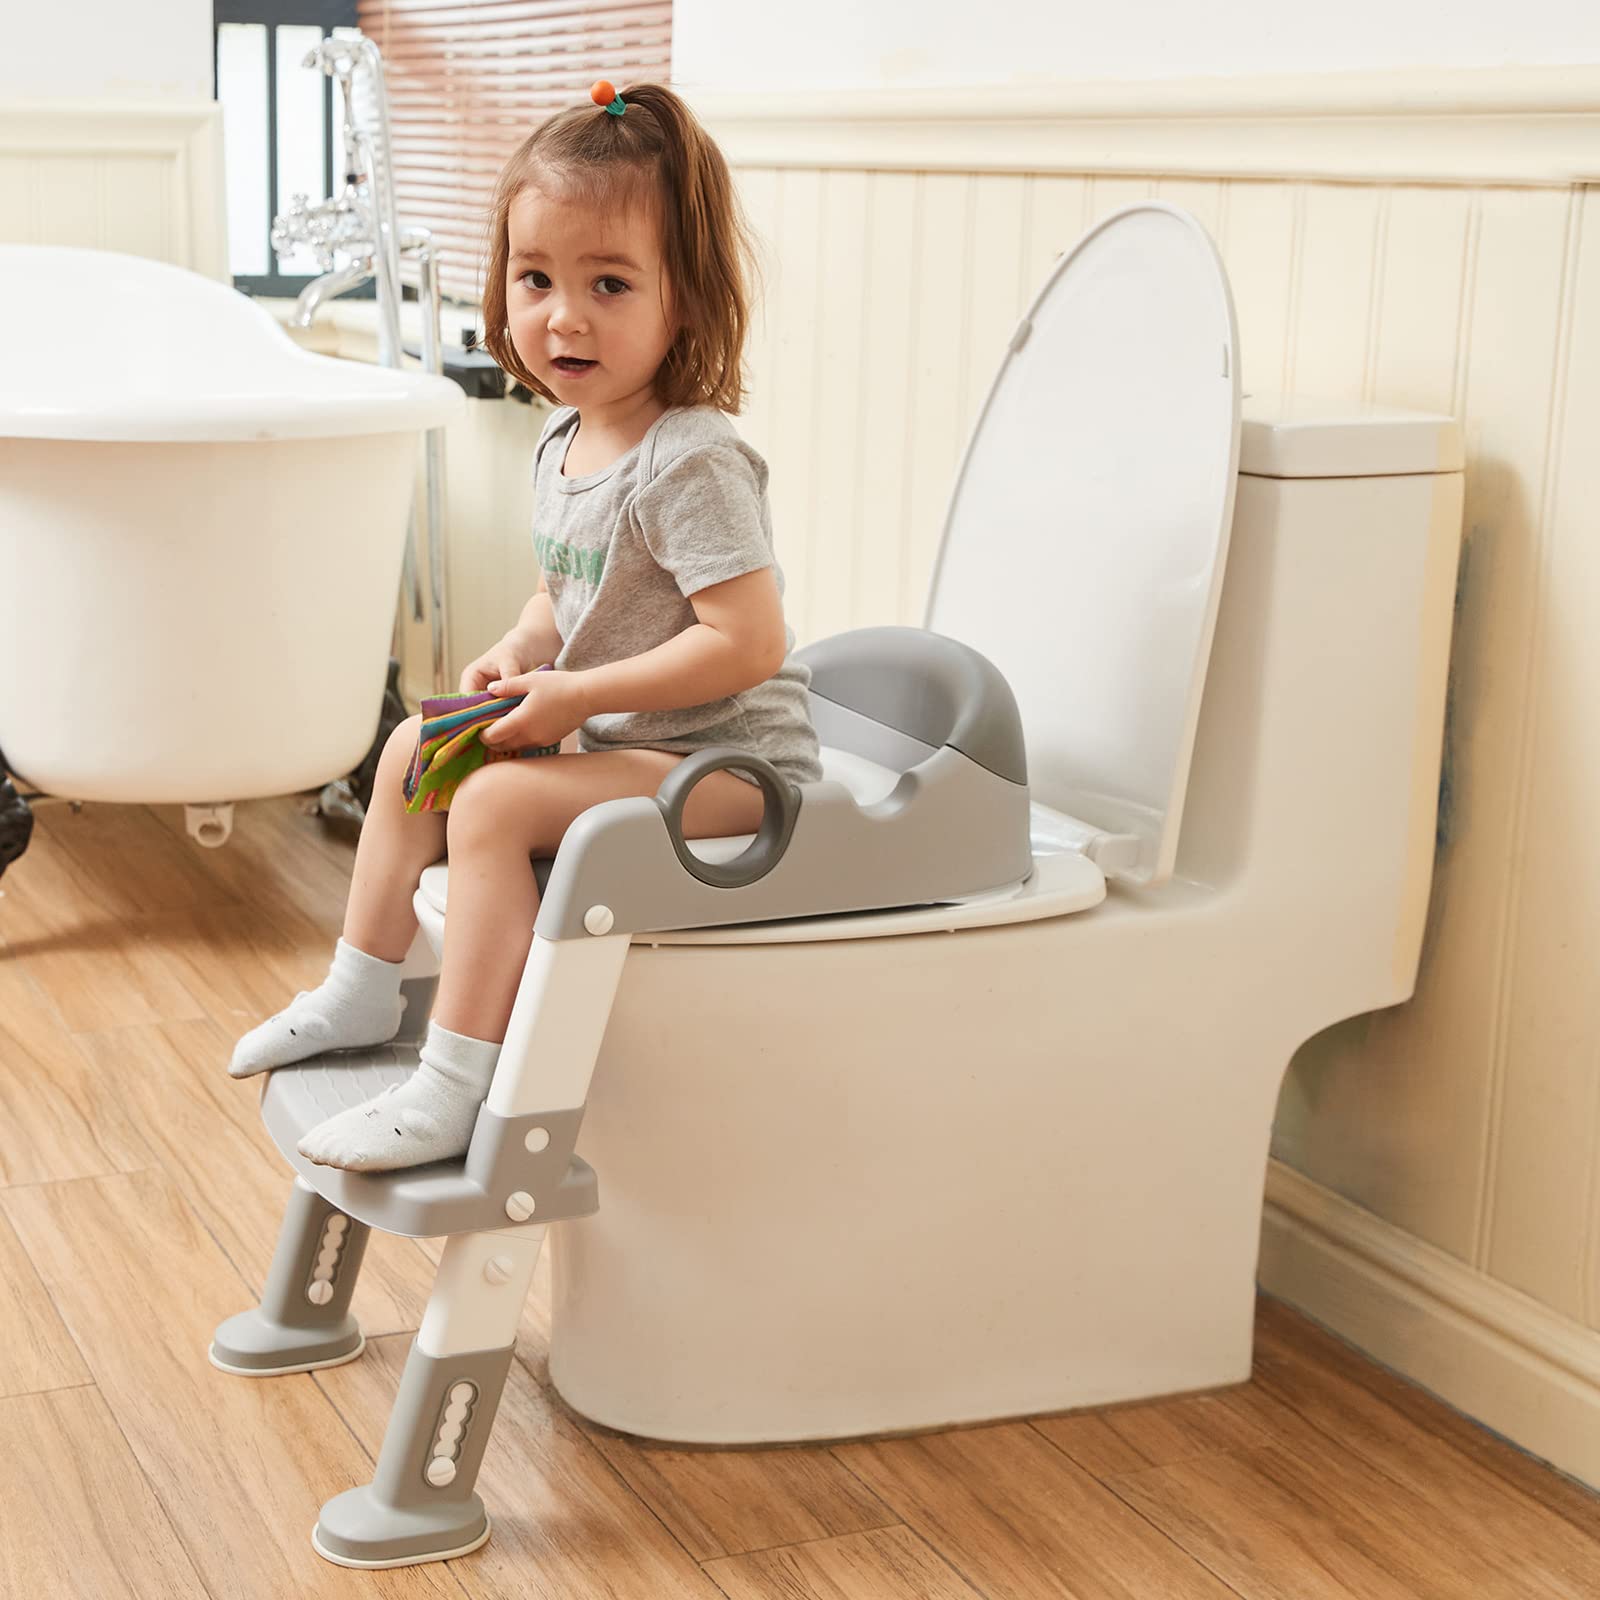 toilet training baby potty chair Baby toddler child potty training & transition potty seat,kids potty